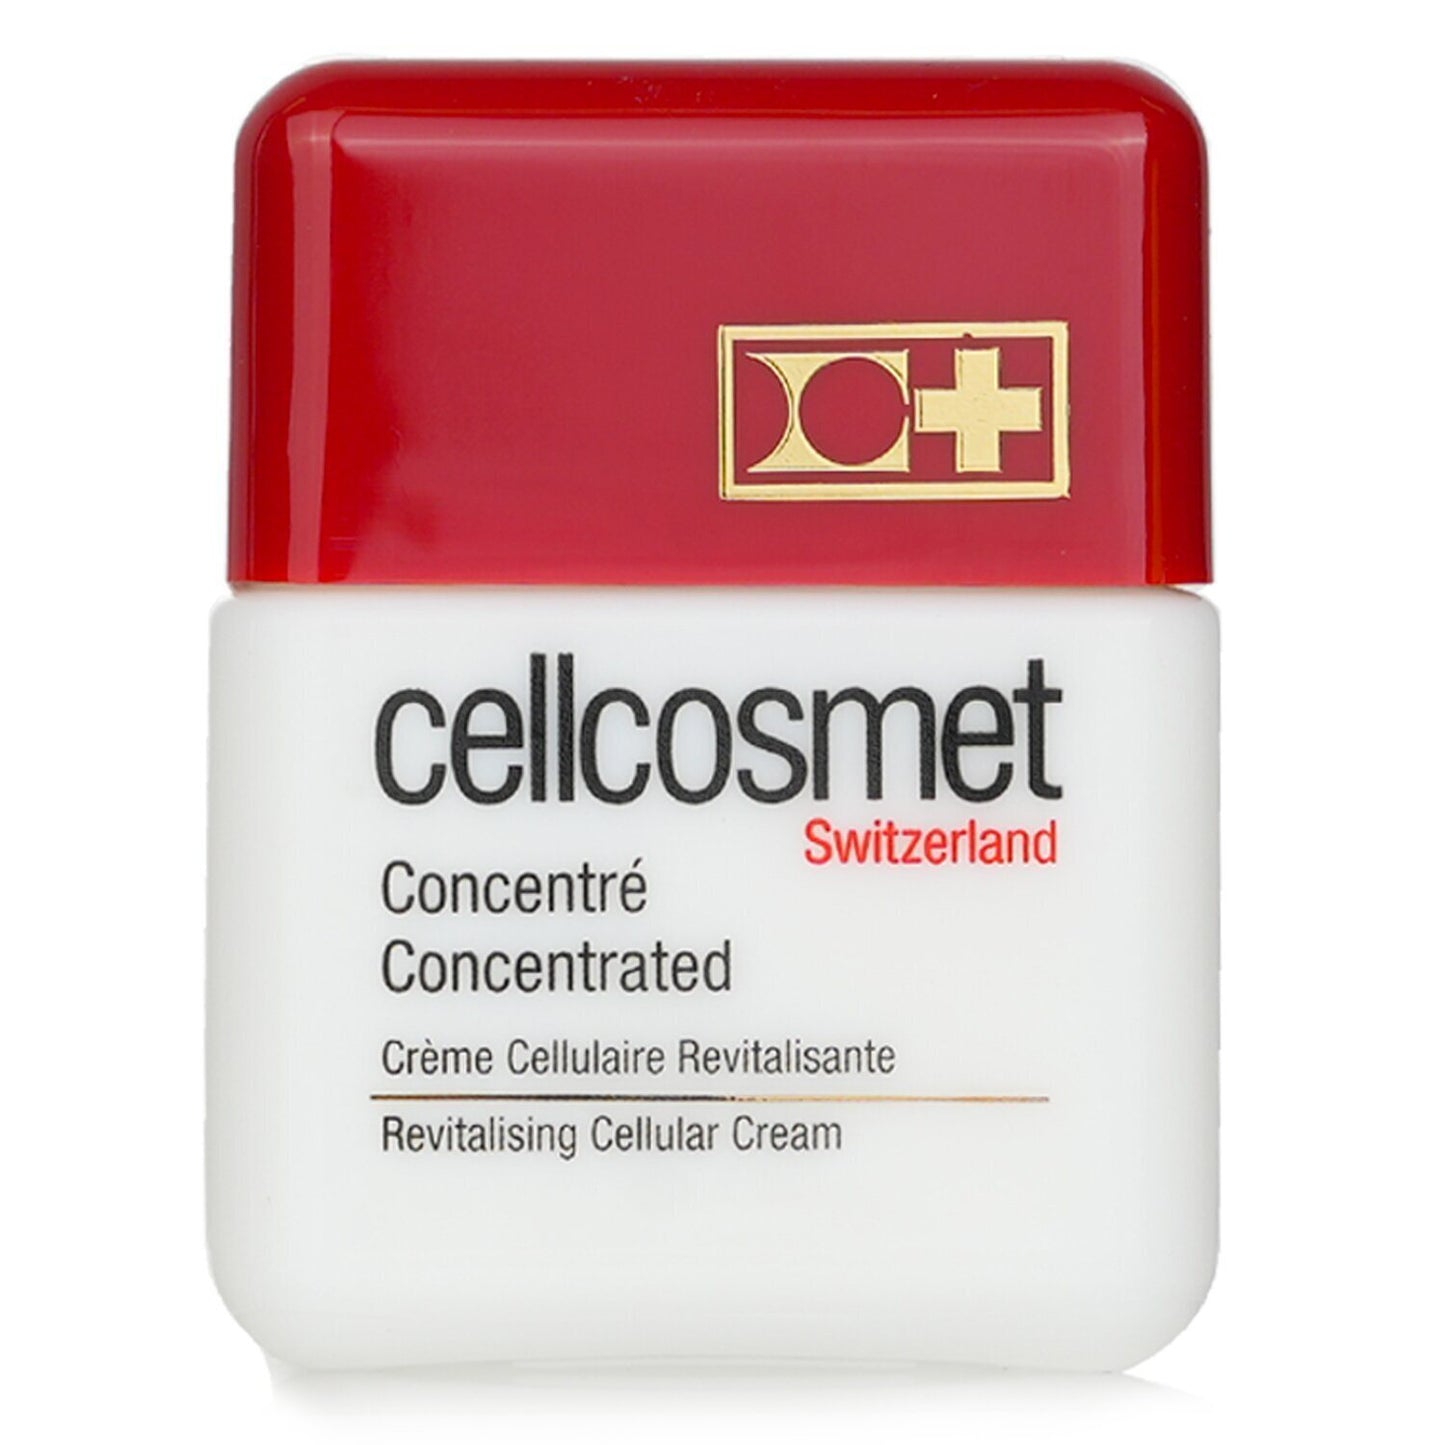 CELLCOSMET & CELLMEN - Cellcosmet Concentrated Revitalising Cellular Cream 575661 50ml/1.77oz - lolaluxeshop